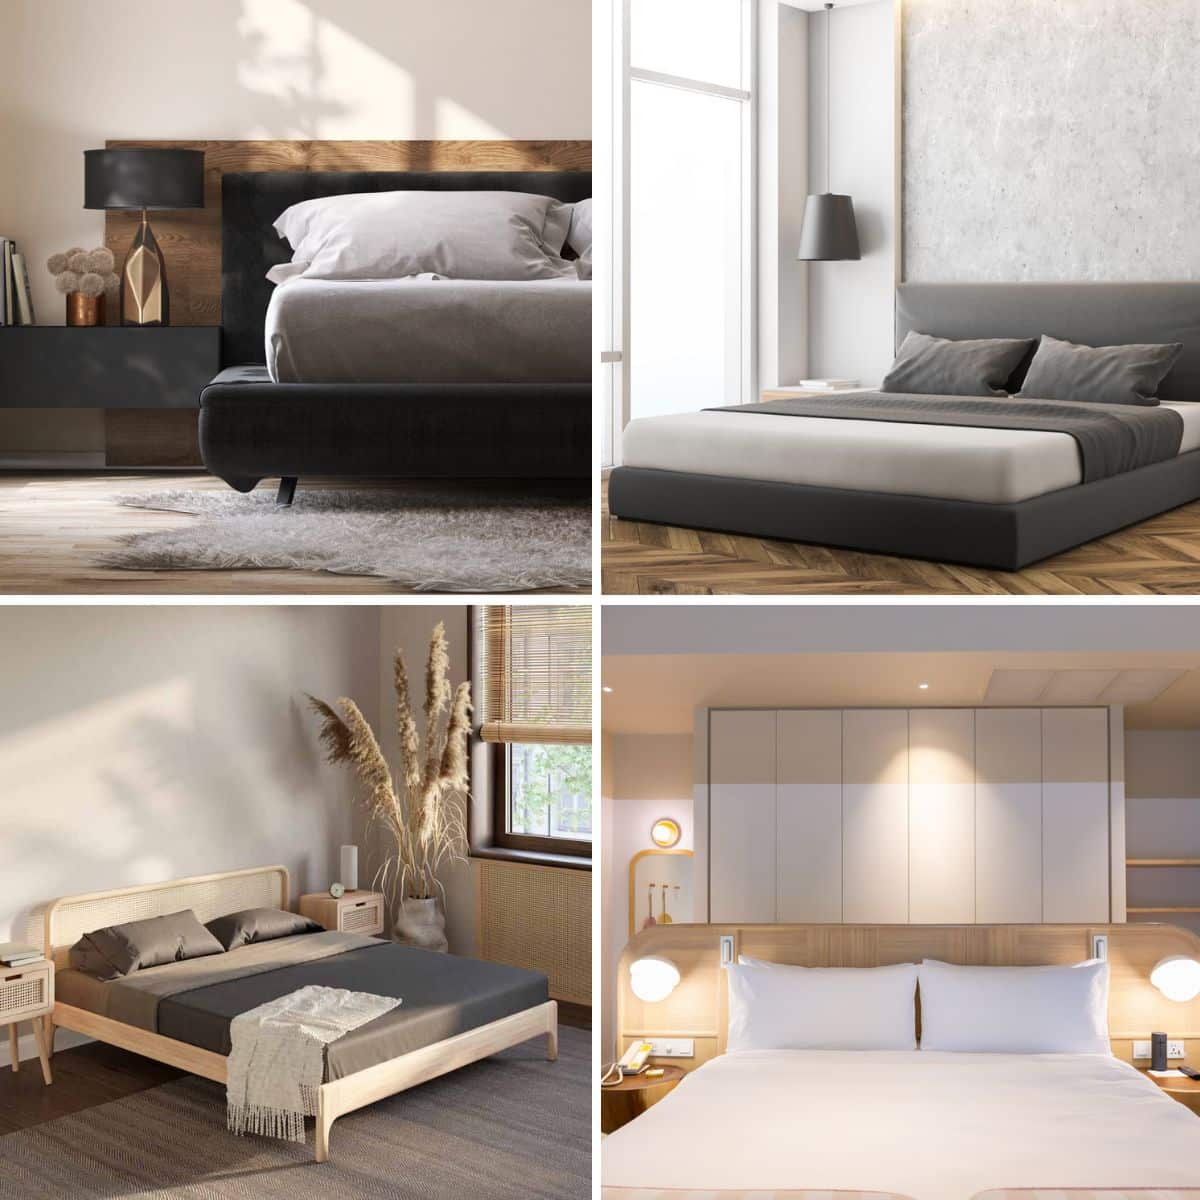 different bedroom designs with microfiber bedsheets